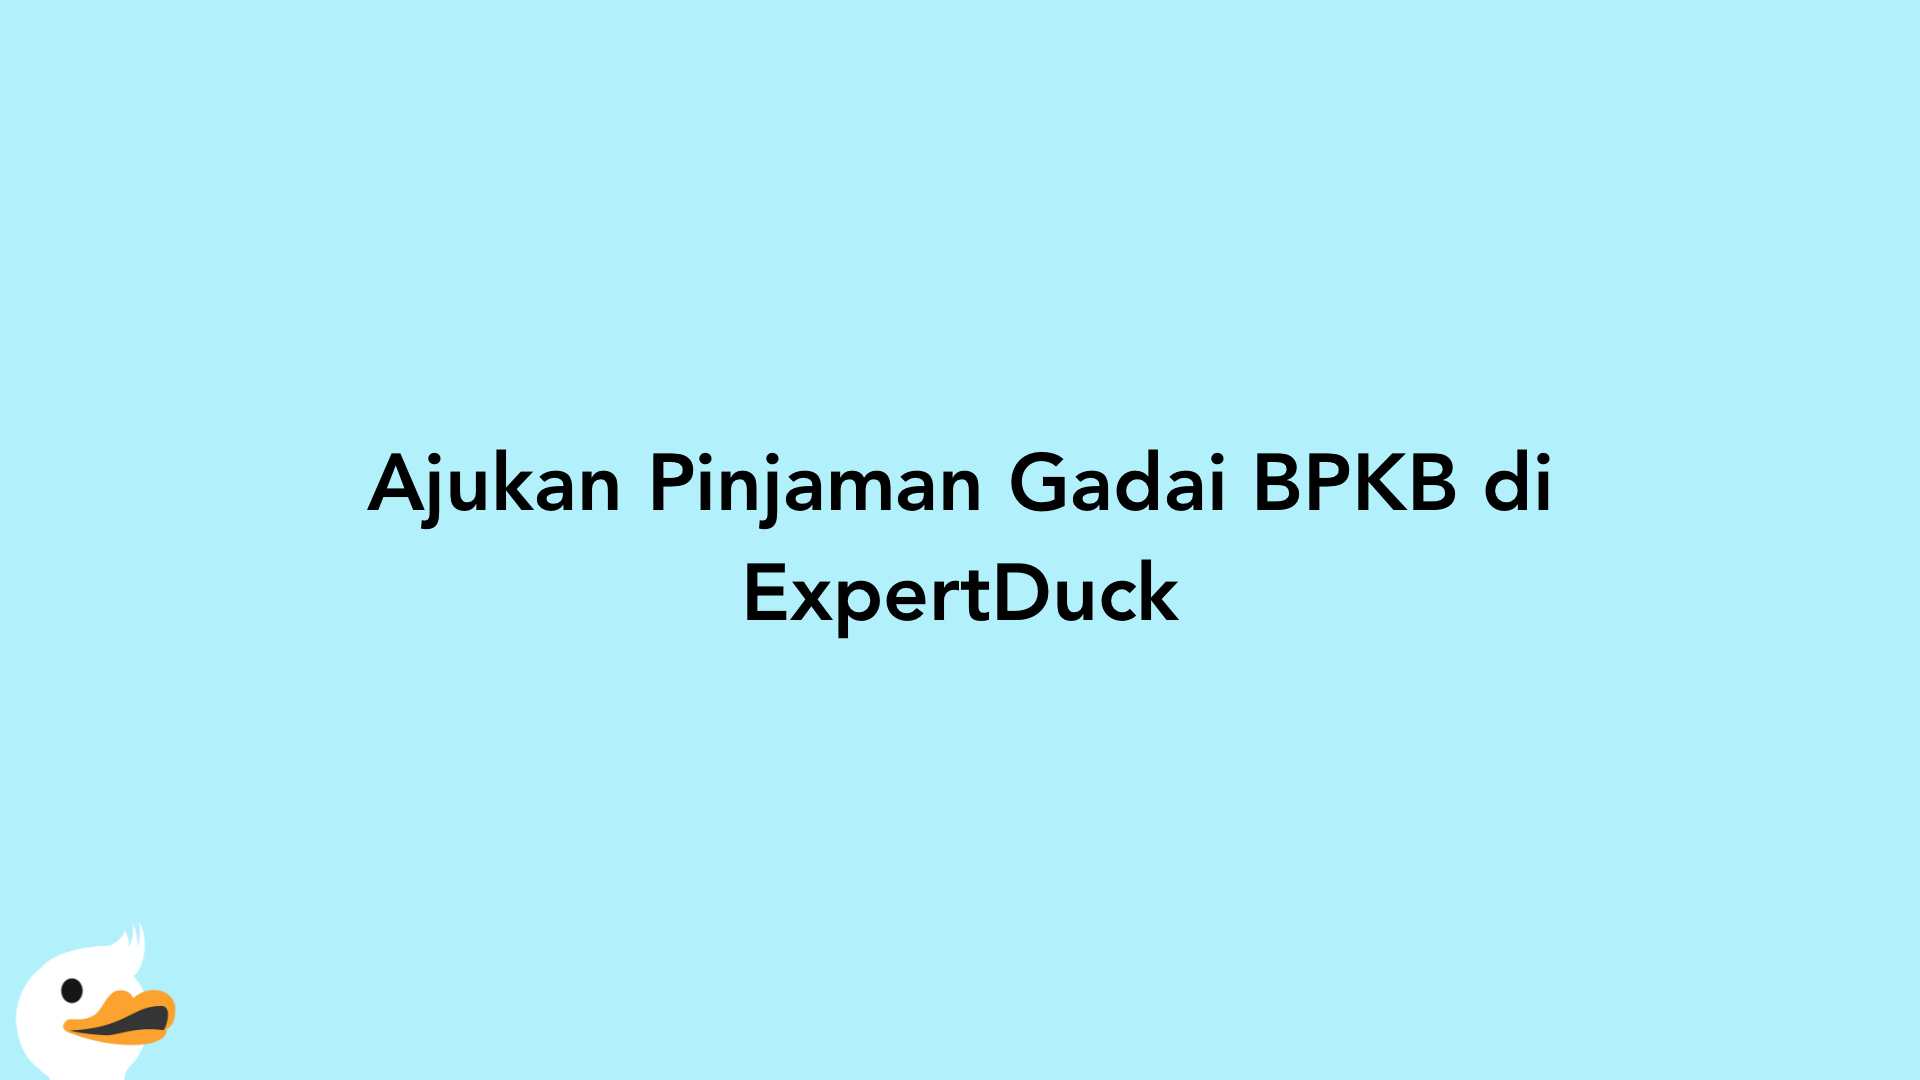 Ajukan Pinjaman Gadai BPKB di ExpertDuck